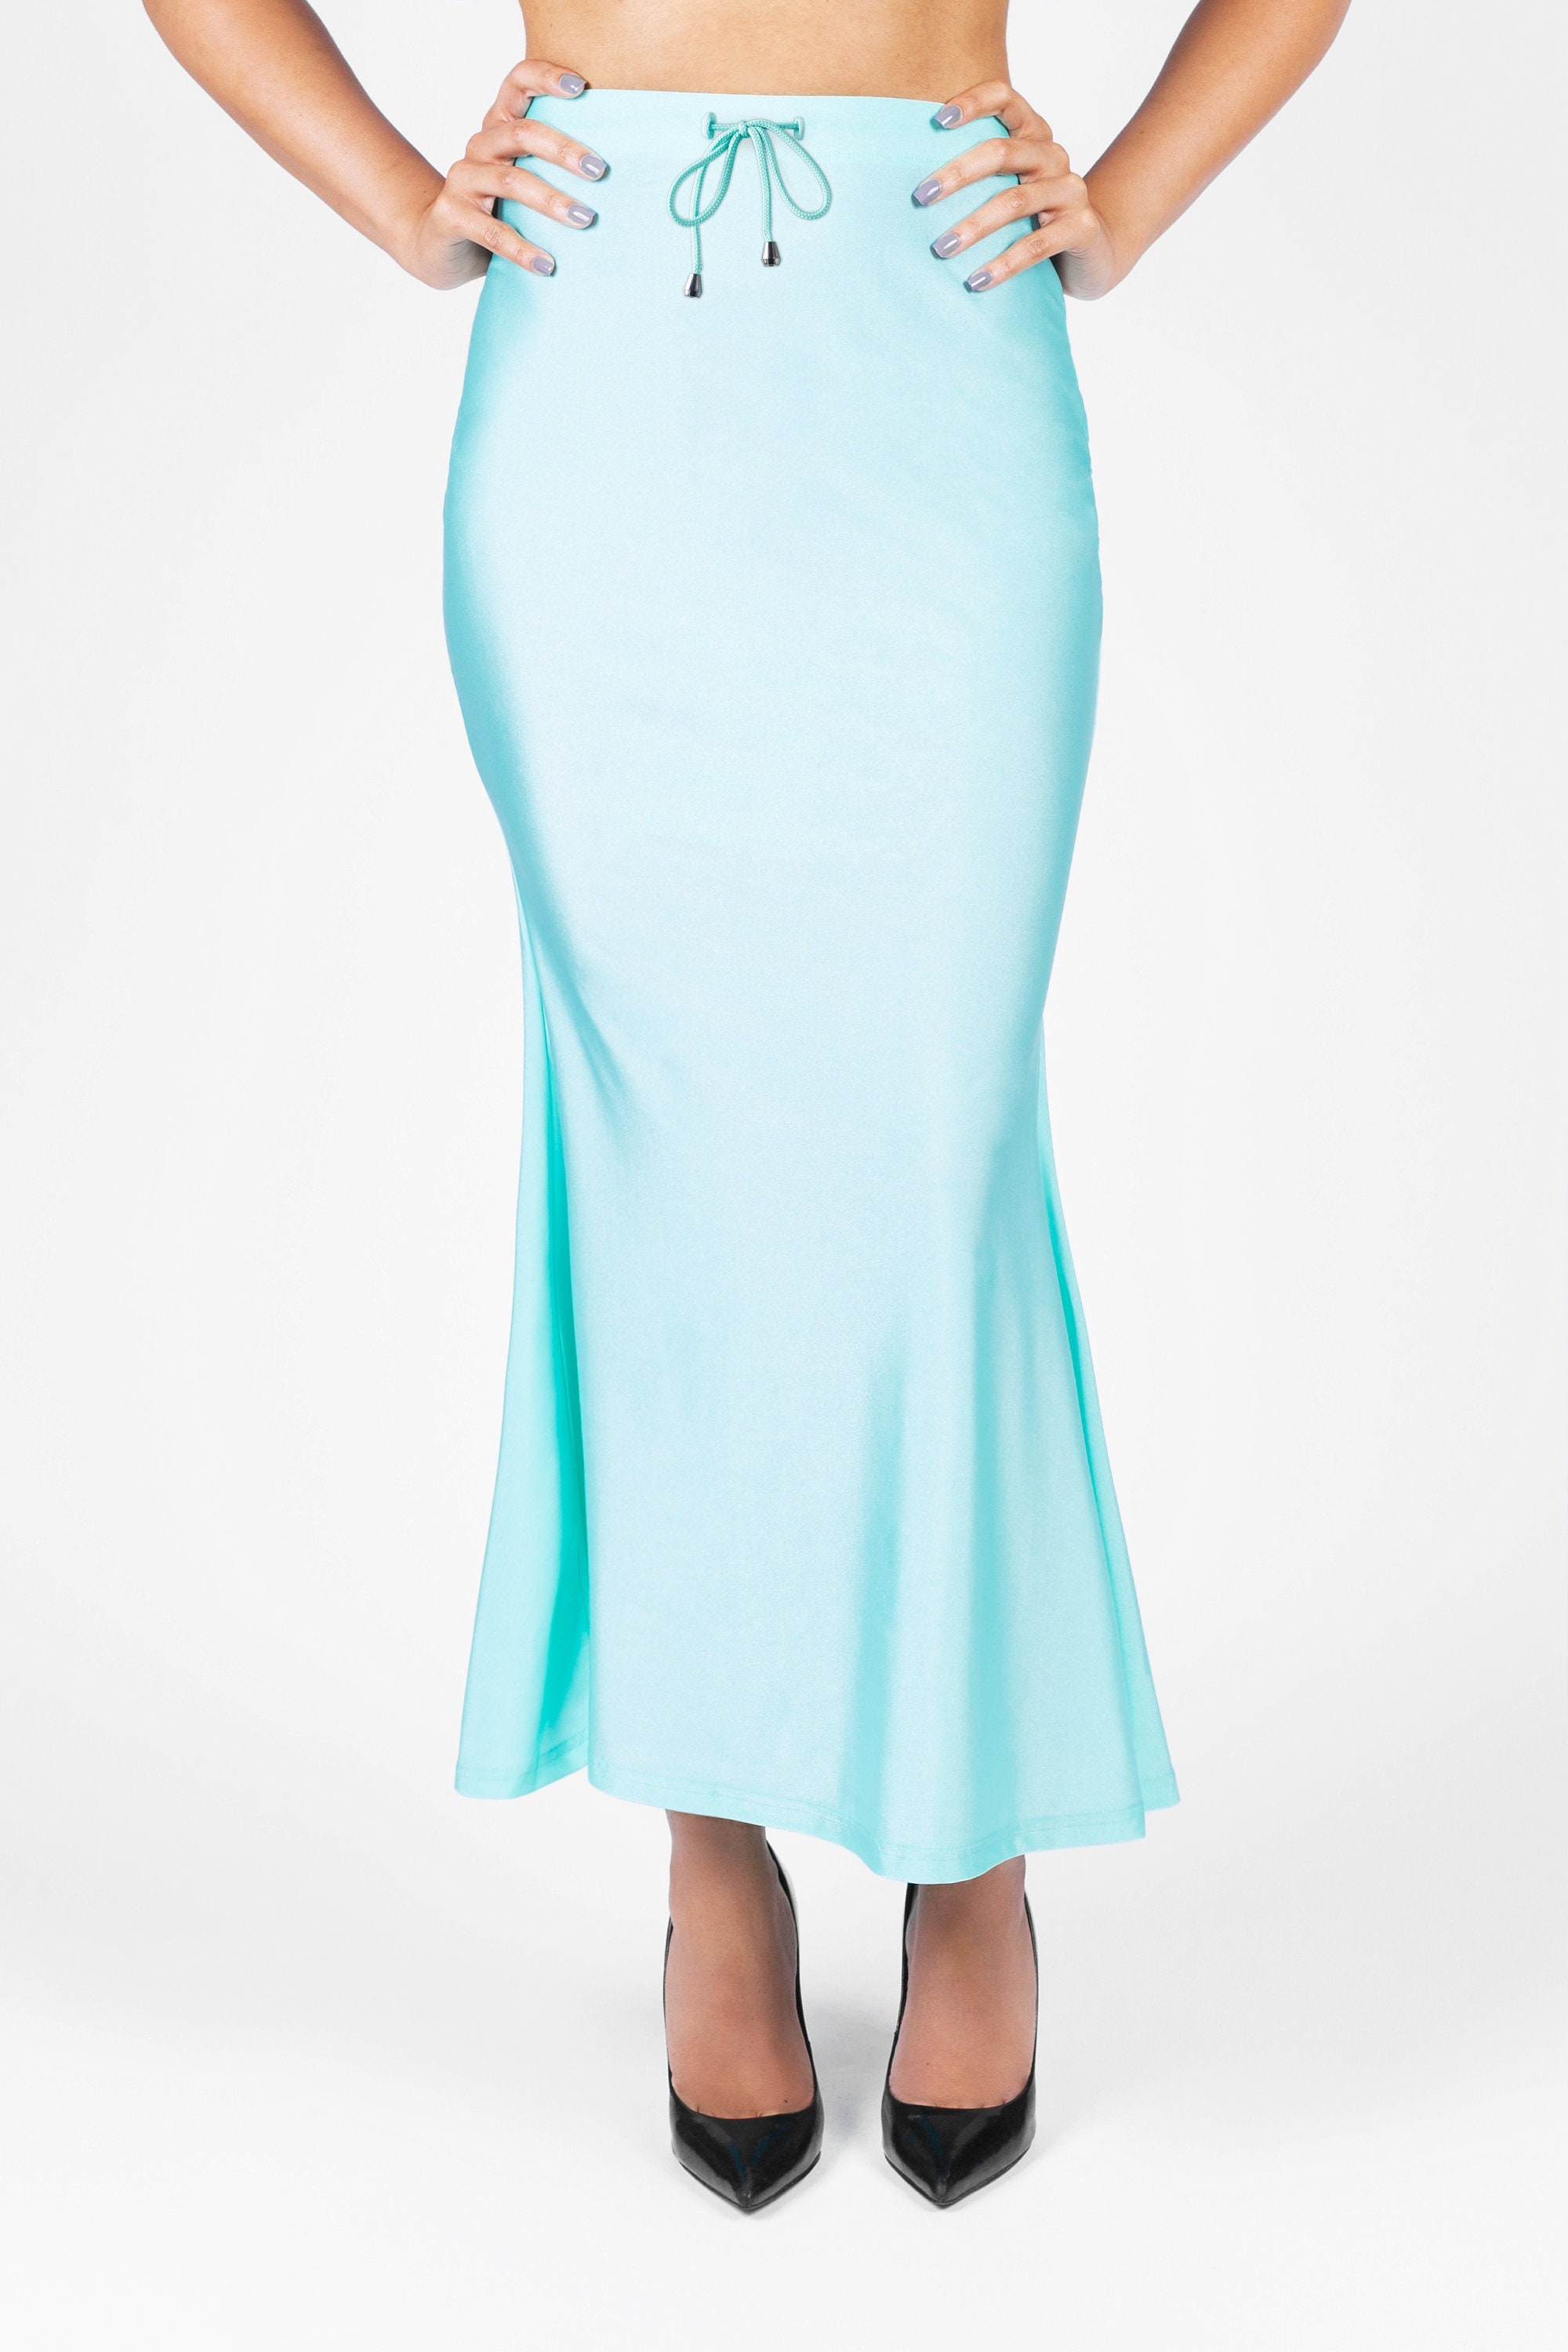 Turquoise Blue Saree Shaper Fitted Saree Petticoat for Women Light Blue Saree  Shapewear Stretchable Saree Shapewear Saree Inskirt 